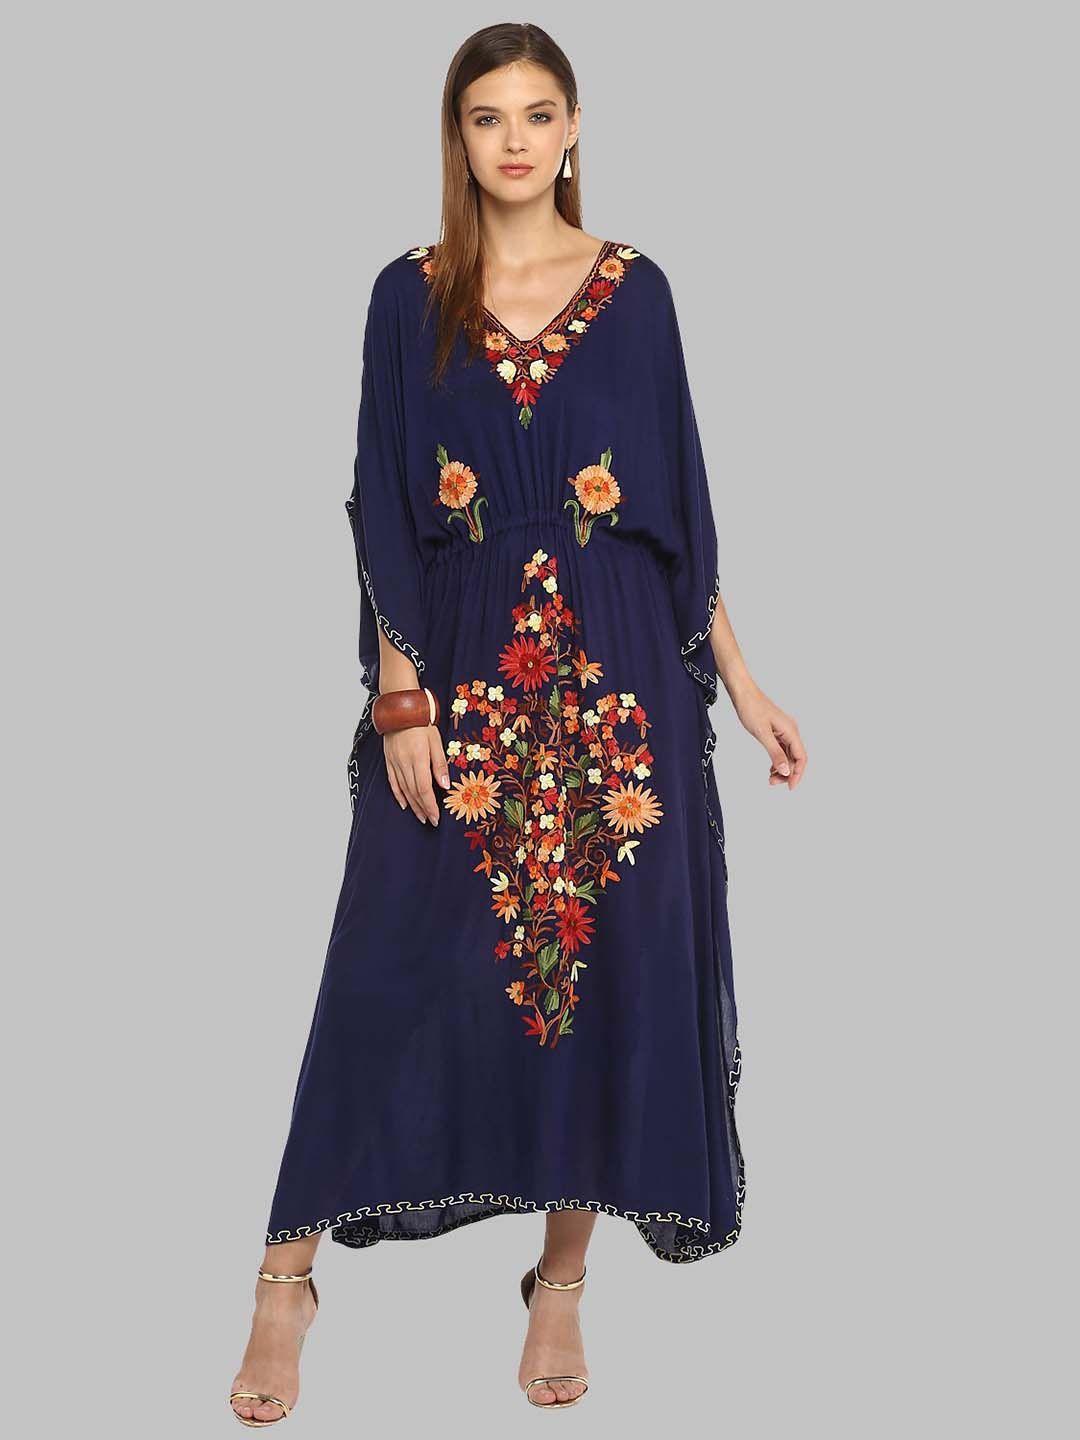 craftbazar-floral-embroidered-kimono-sleeve-kaftan-maxi-dress